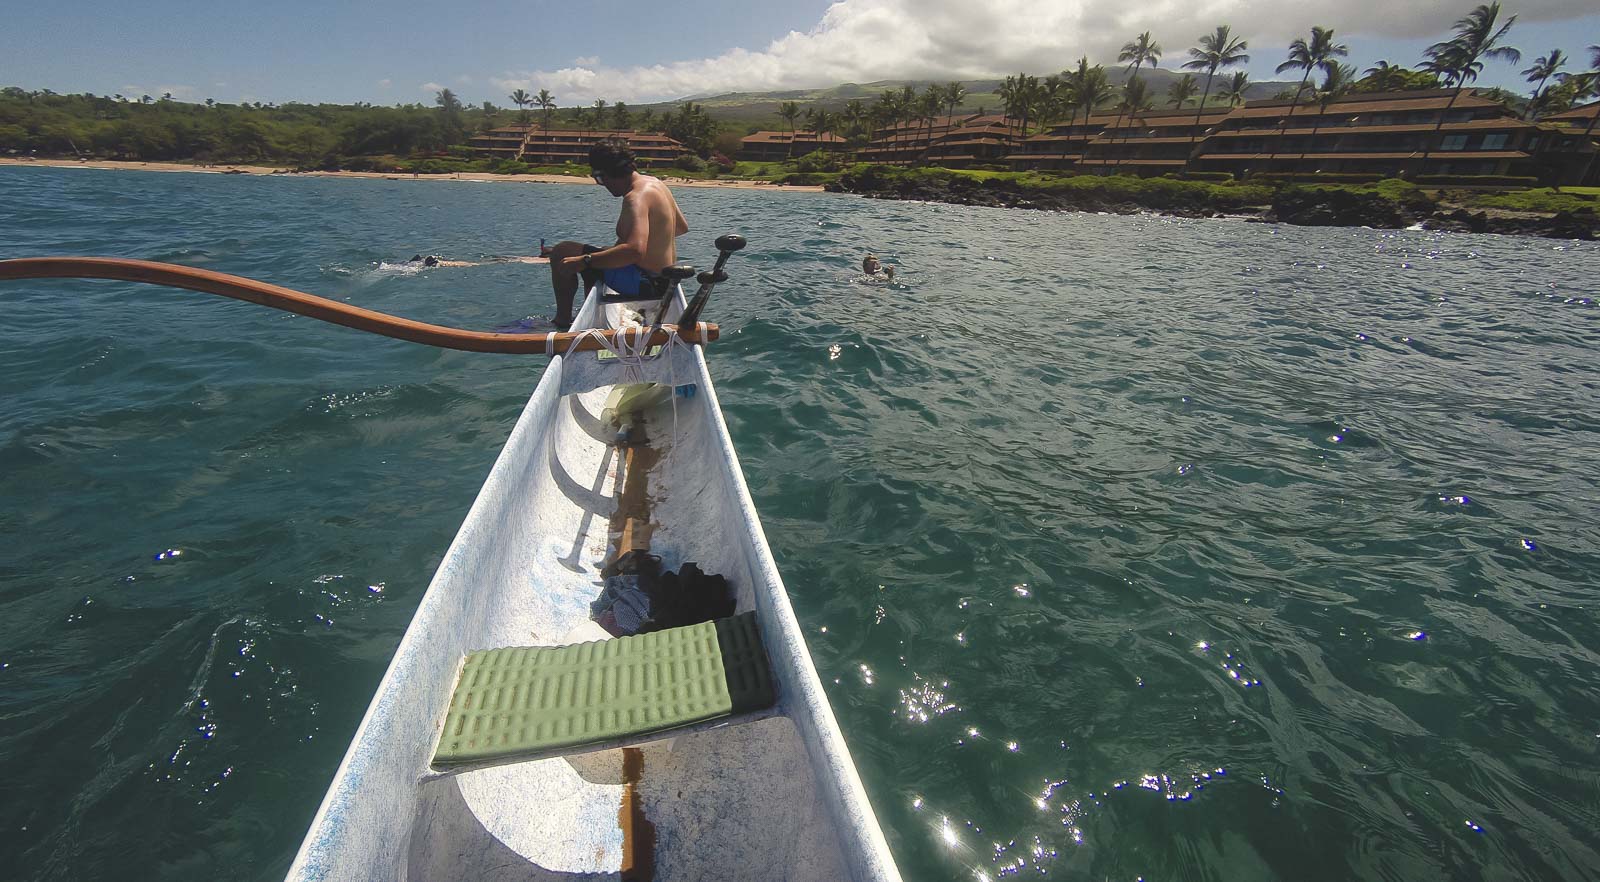 Outrigger Canoe in Maui